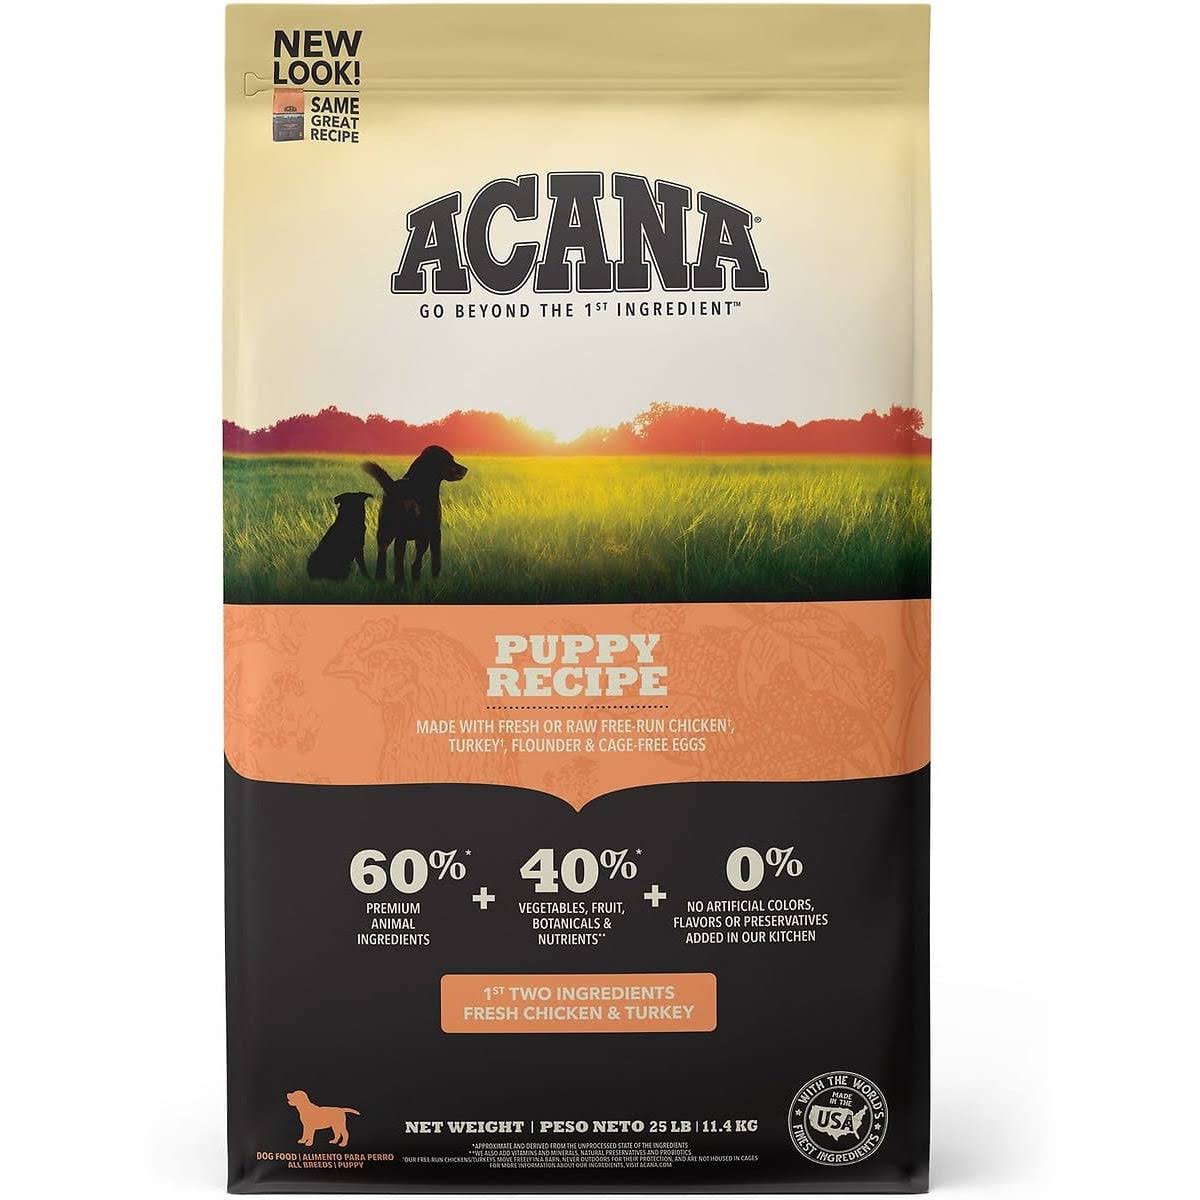 Acana Puppy Dry Dog Food